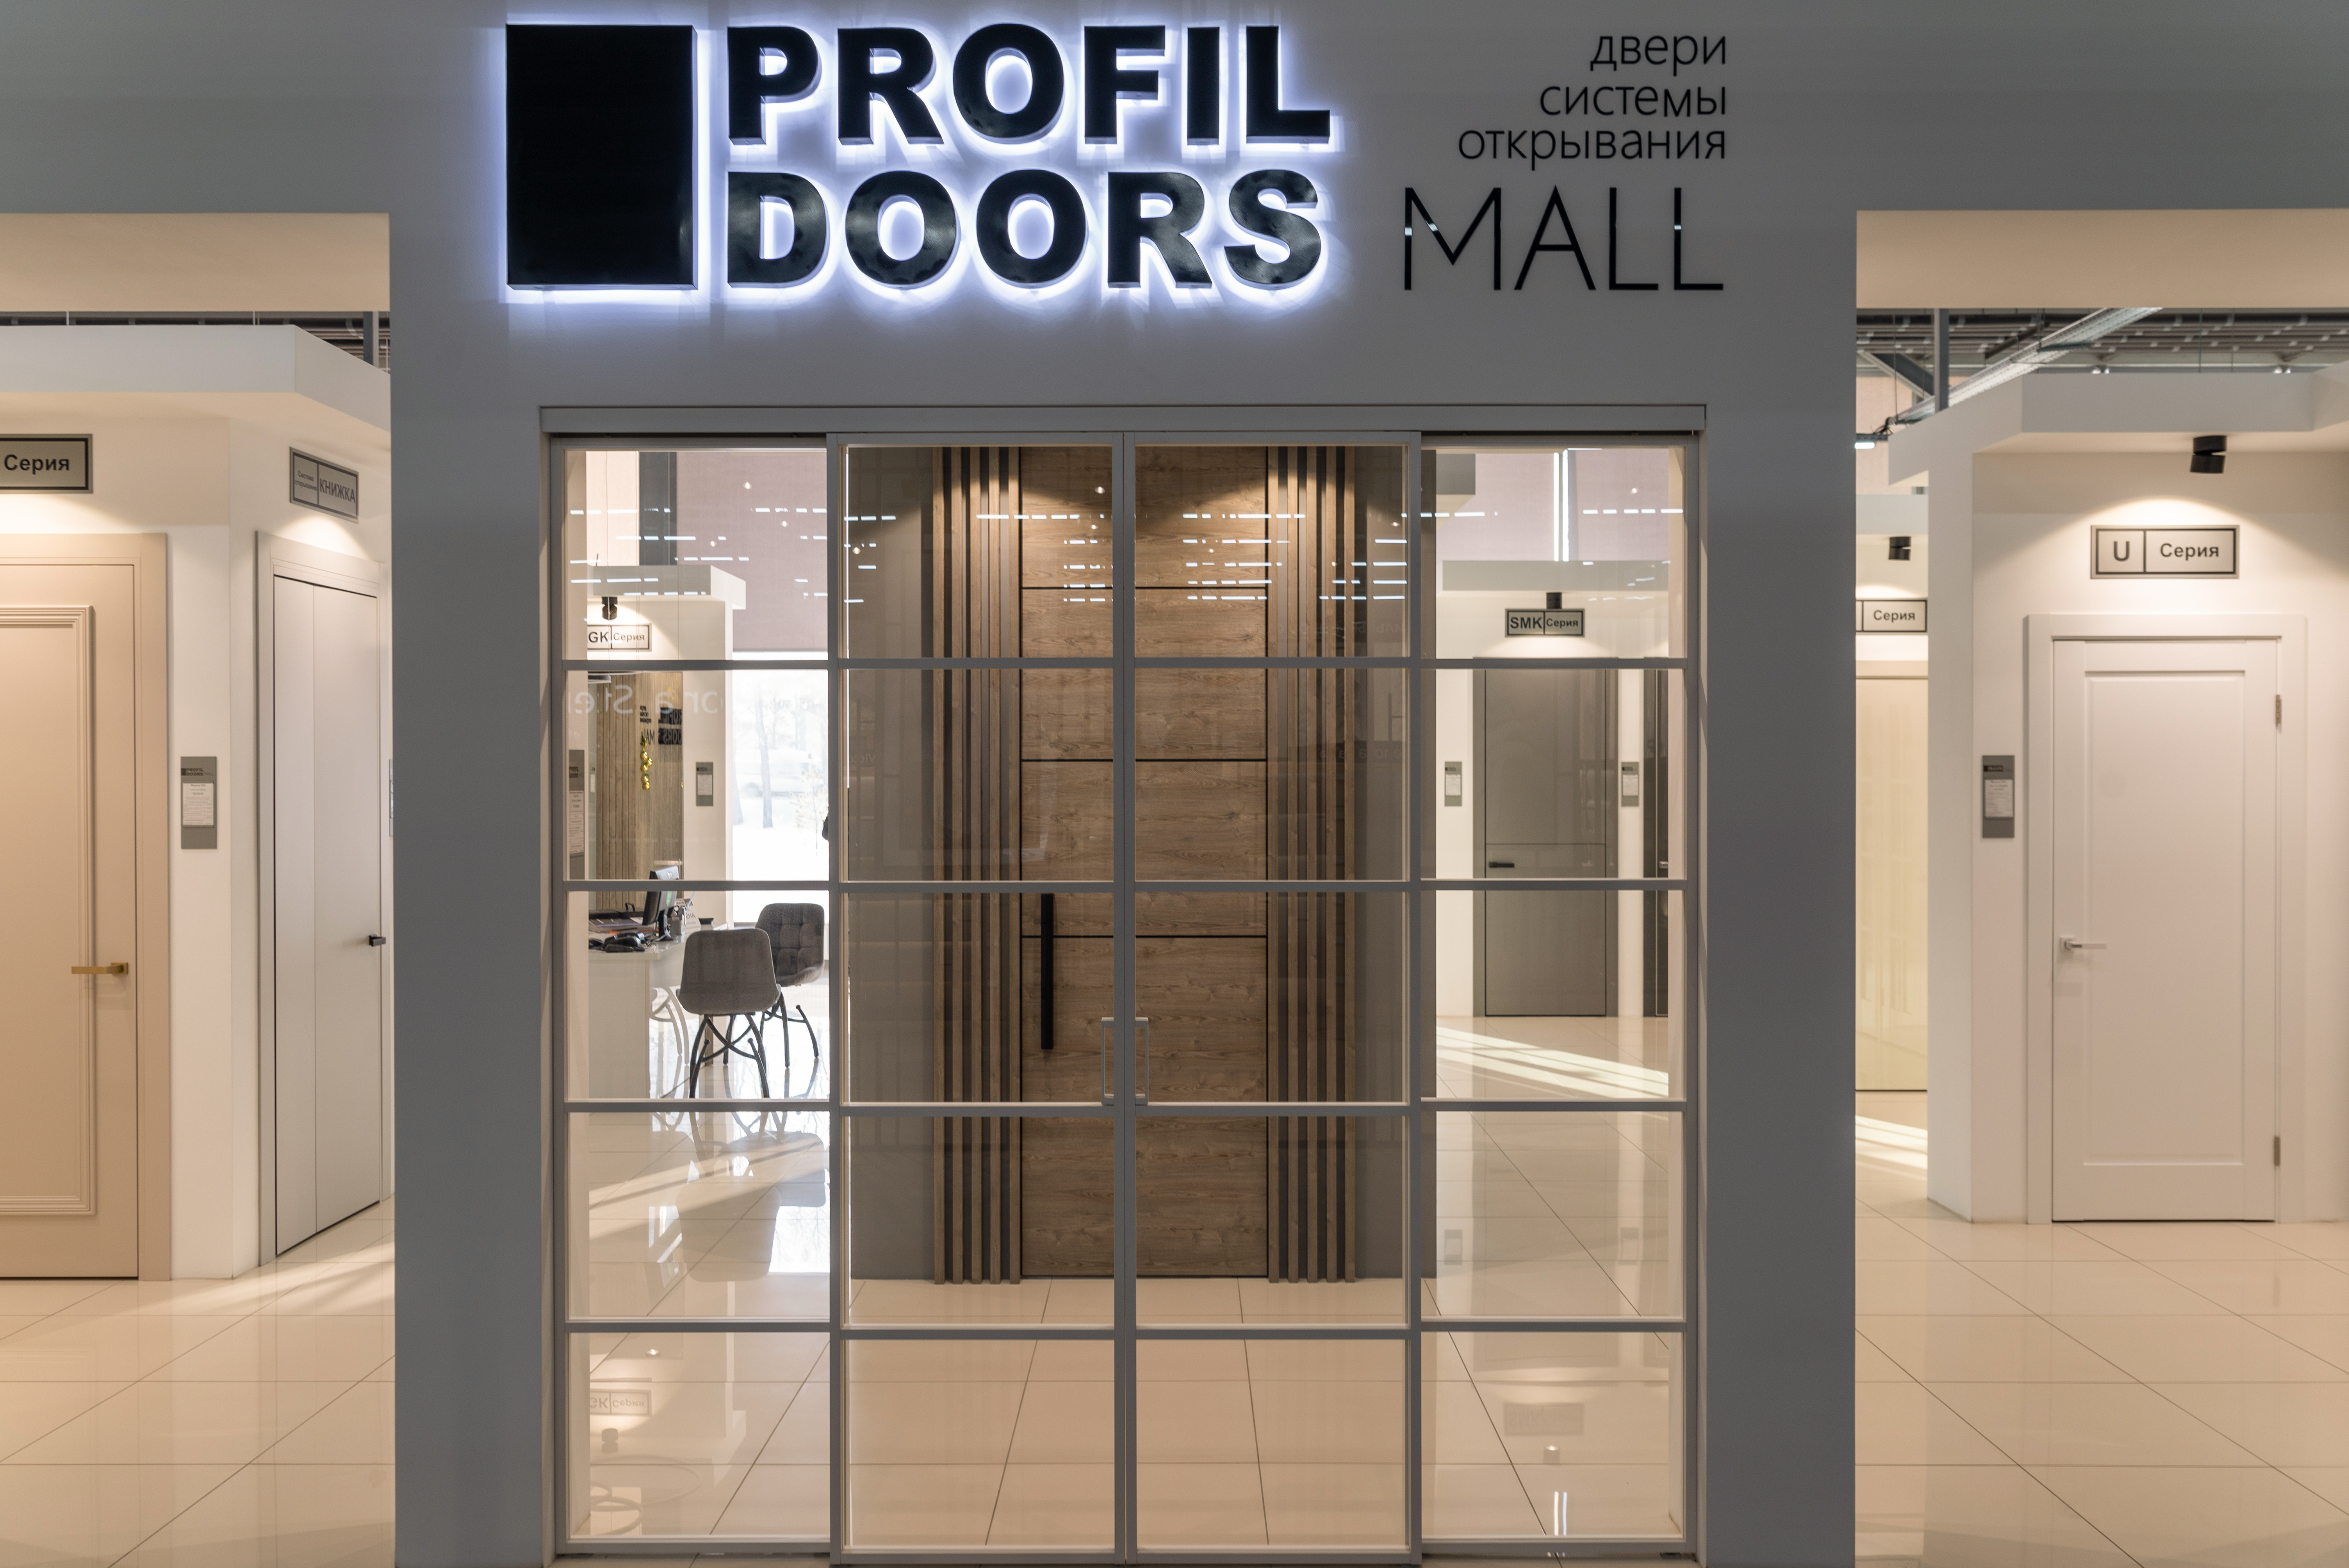 ProfilDoors Mall